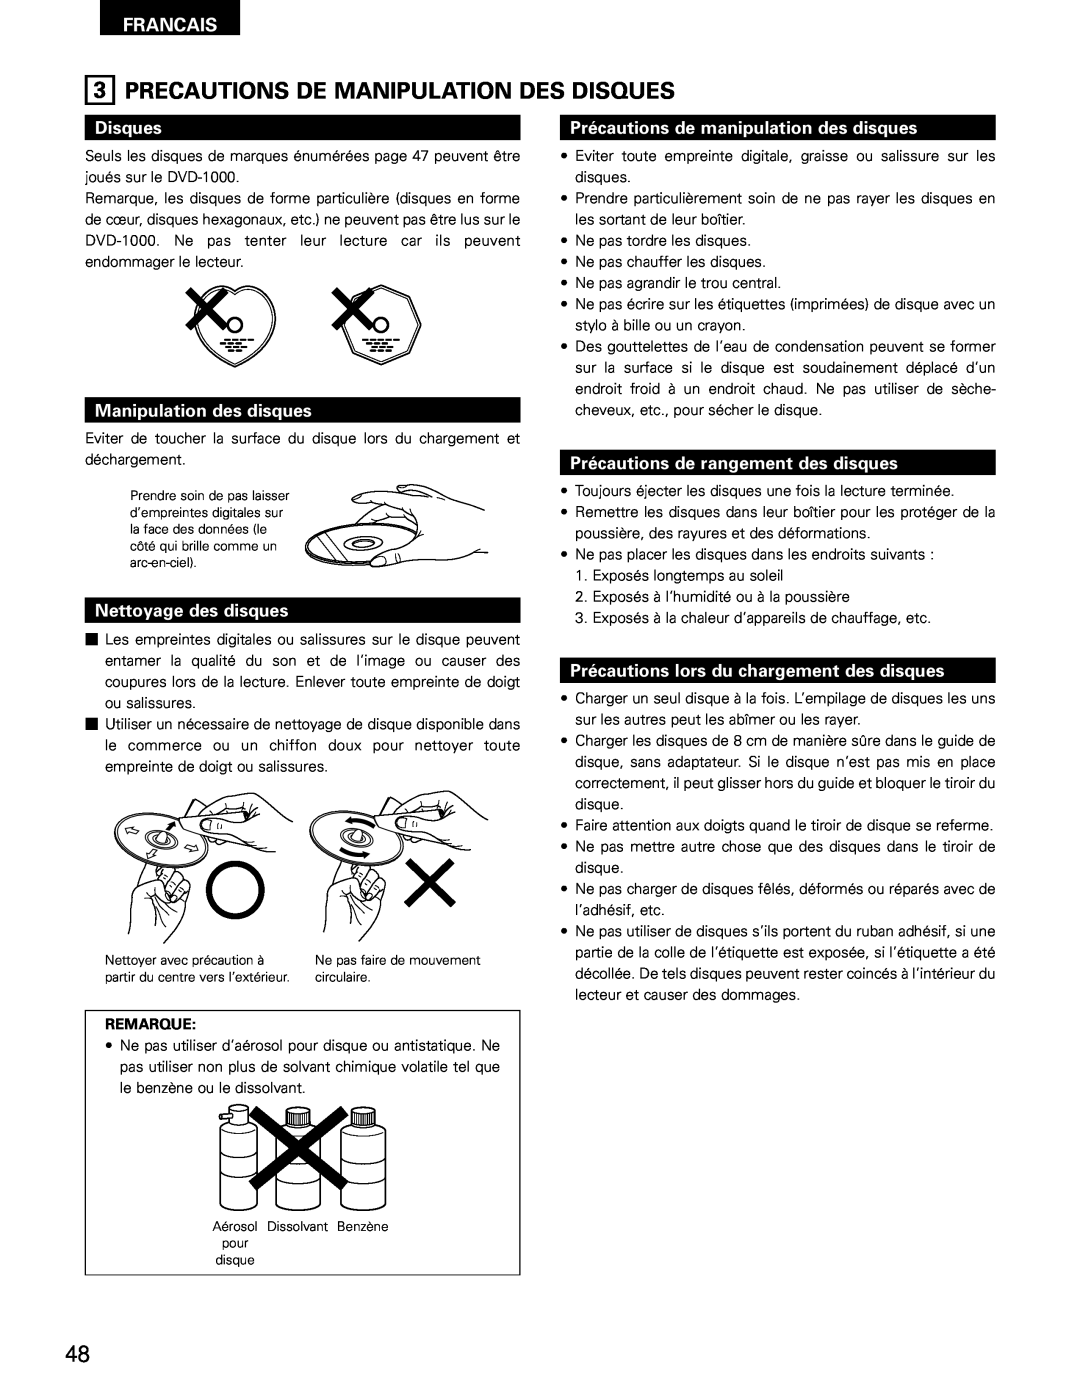 Denon DVD-1000 manual Precautions De Manipulation Des Disques, Manipulation des disques, Nettoyage des disques, Francais 